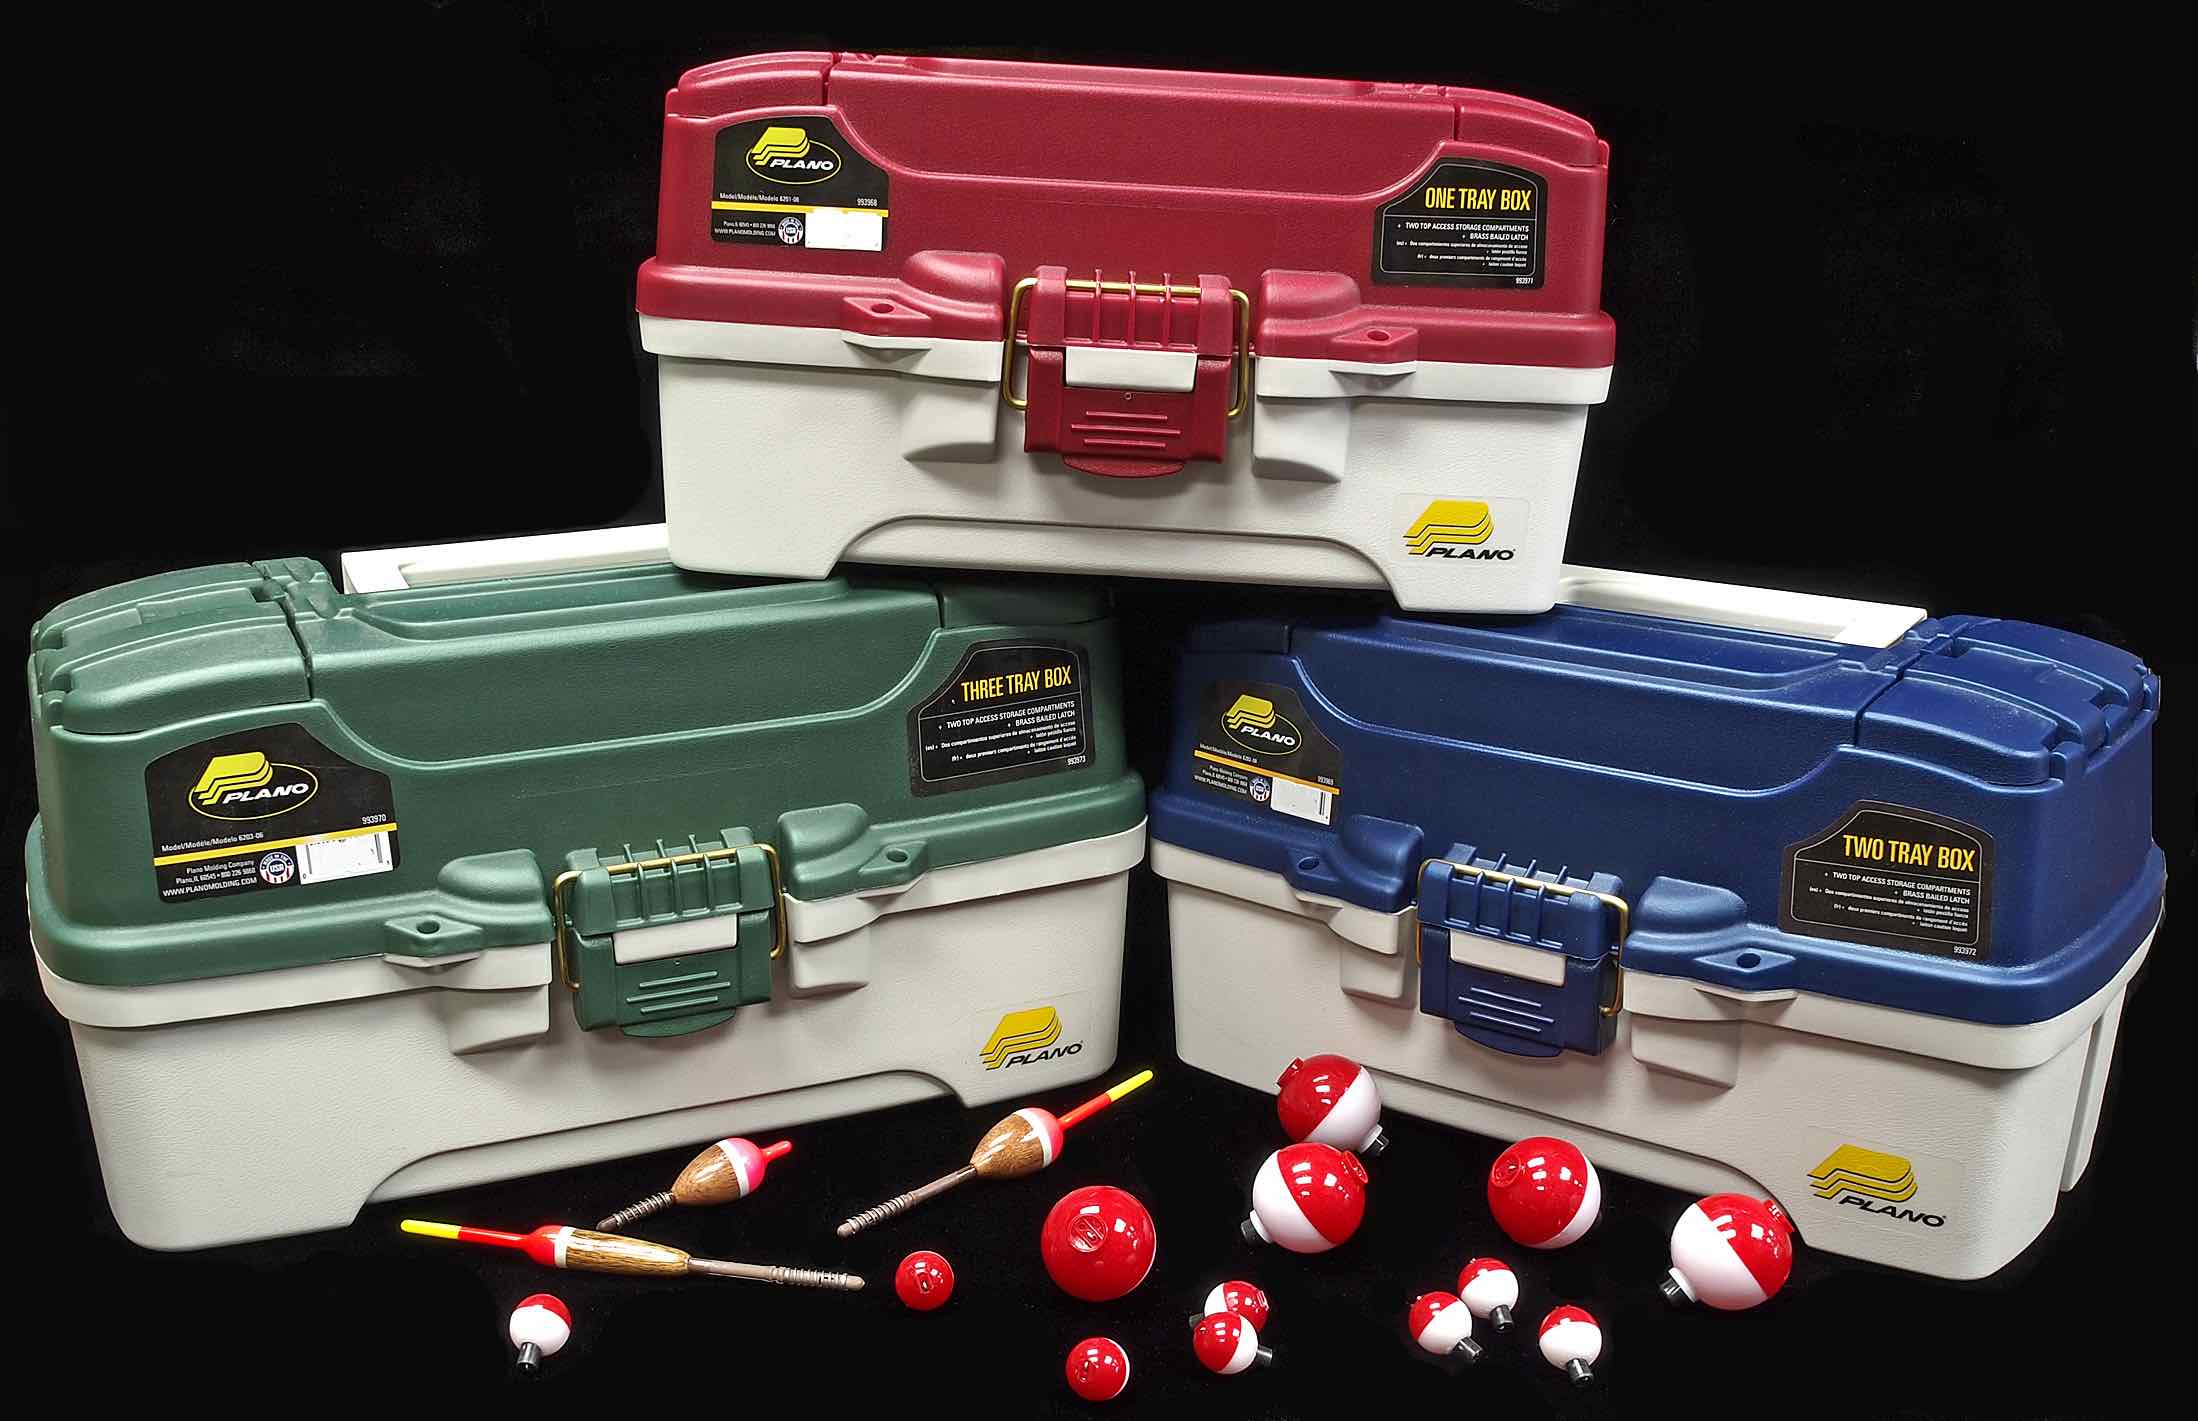 Jaxon Double-sided fishing box RH-309 - Tackle Boxes - PROTACKLESHOP